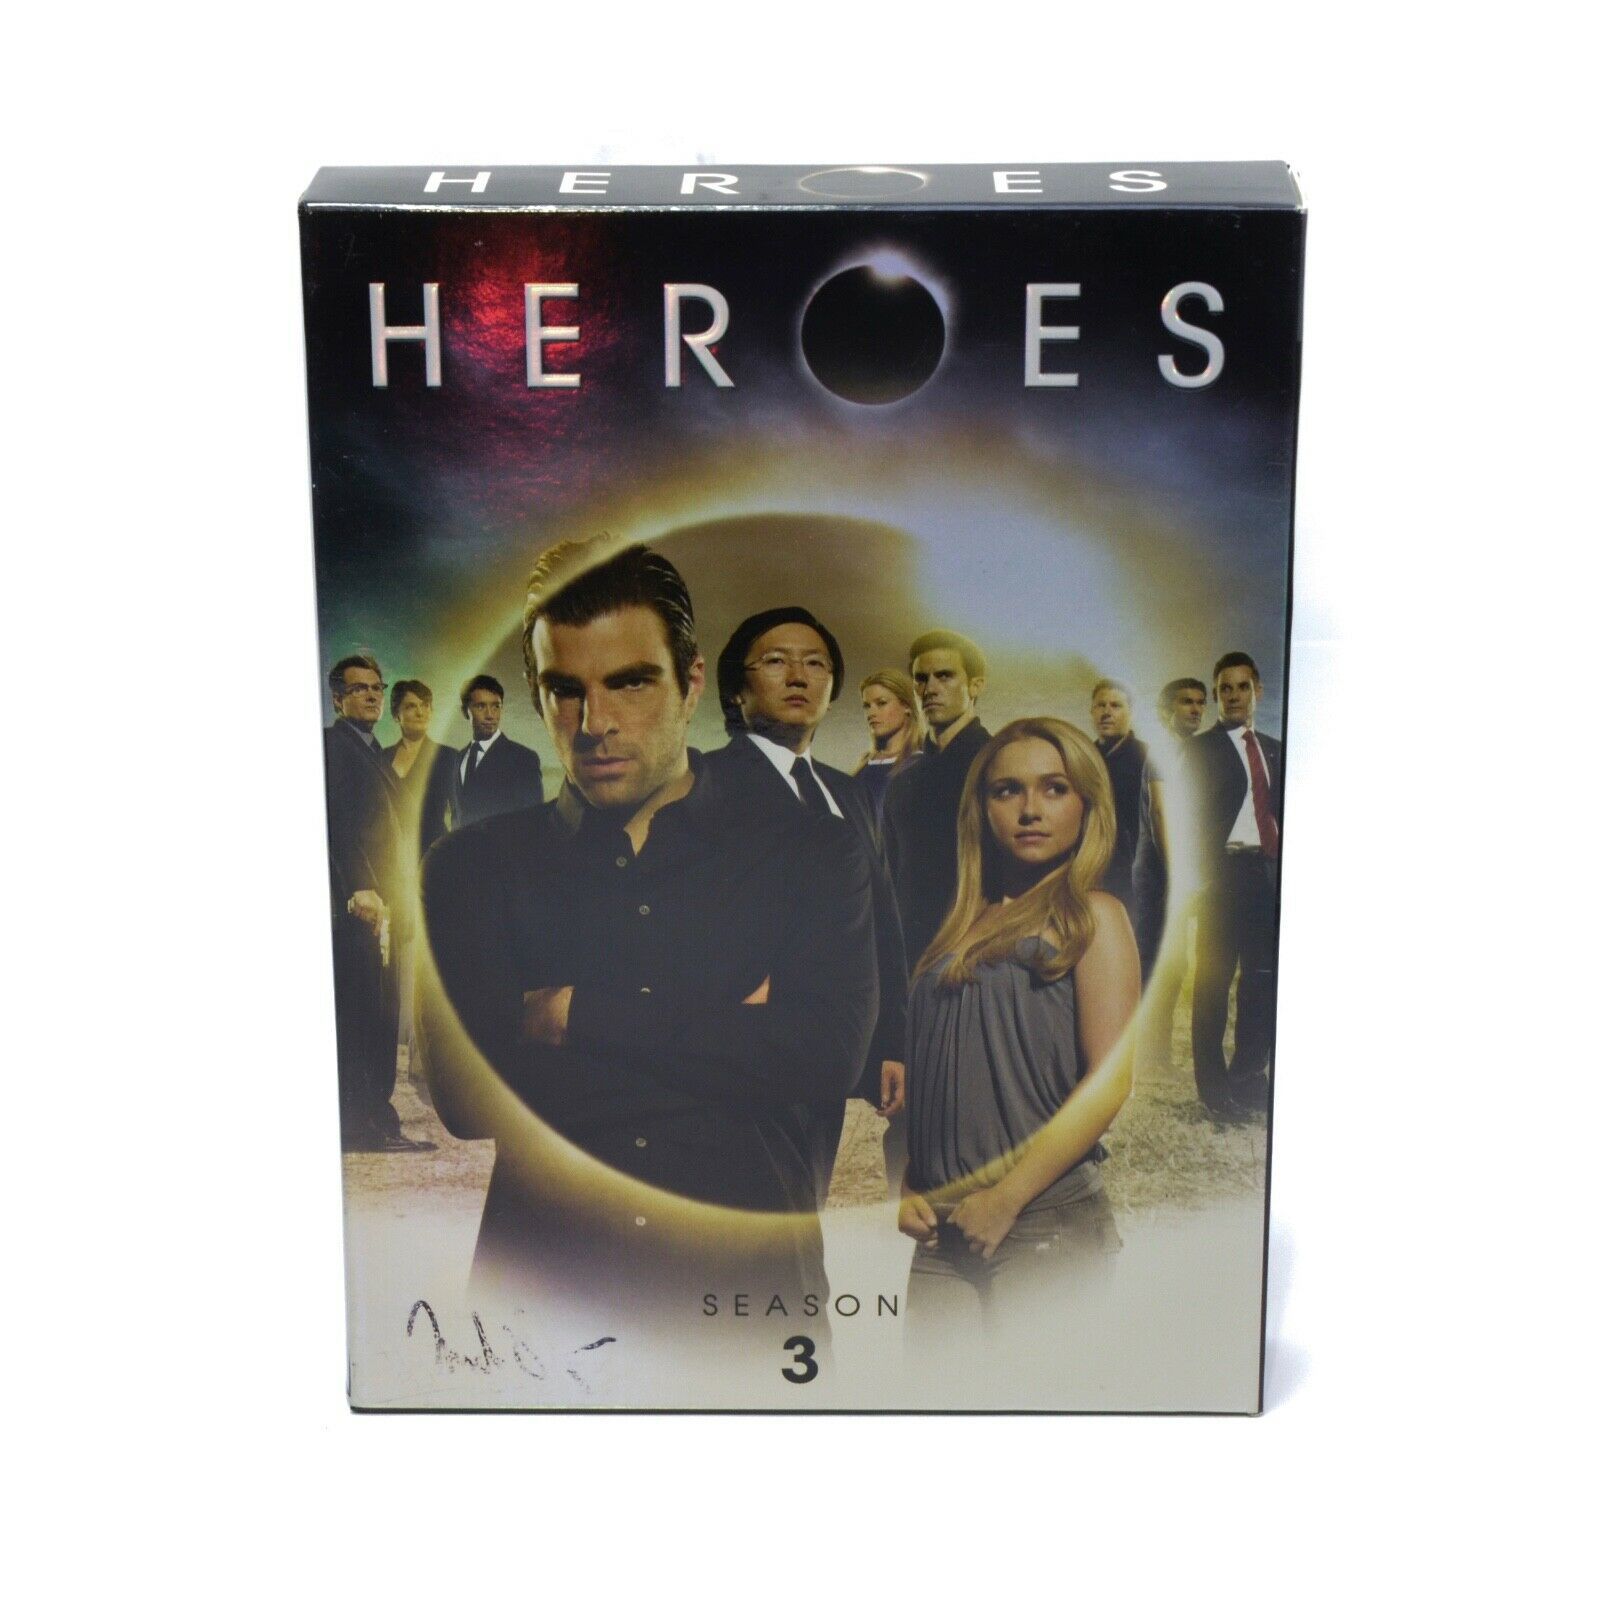 Heroes Season 3 DVD Box Set TV Series and similar items